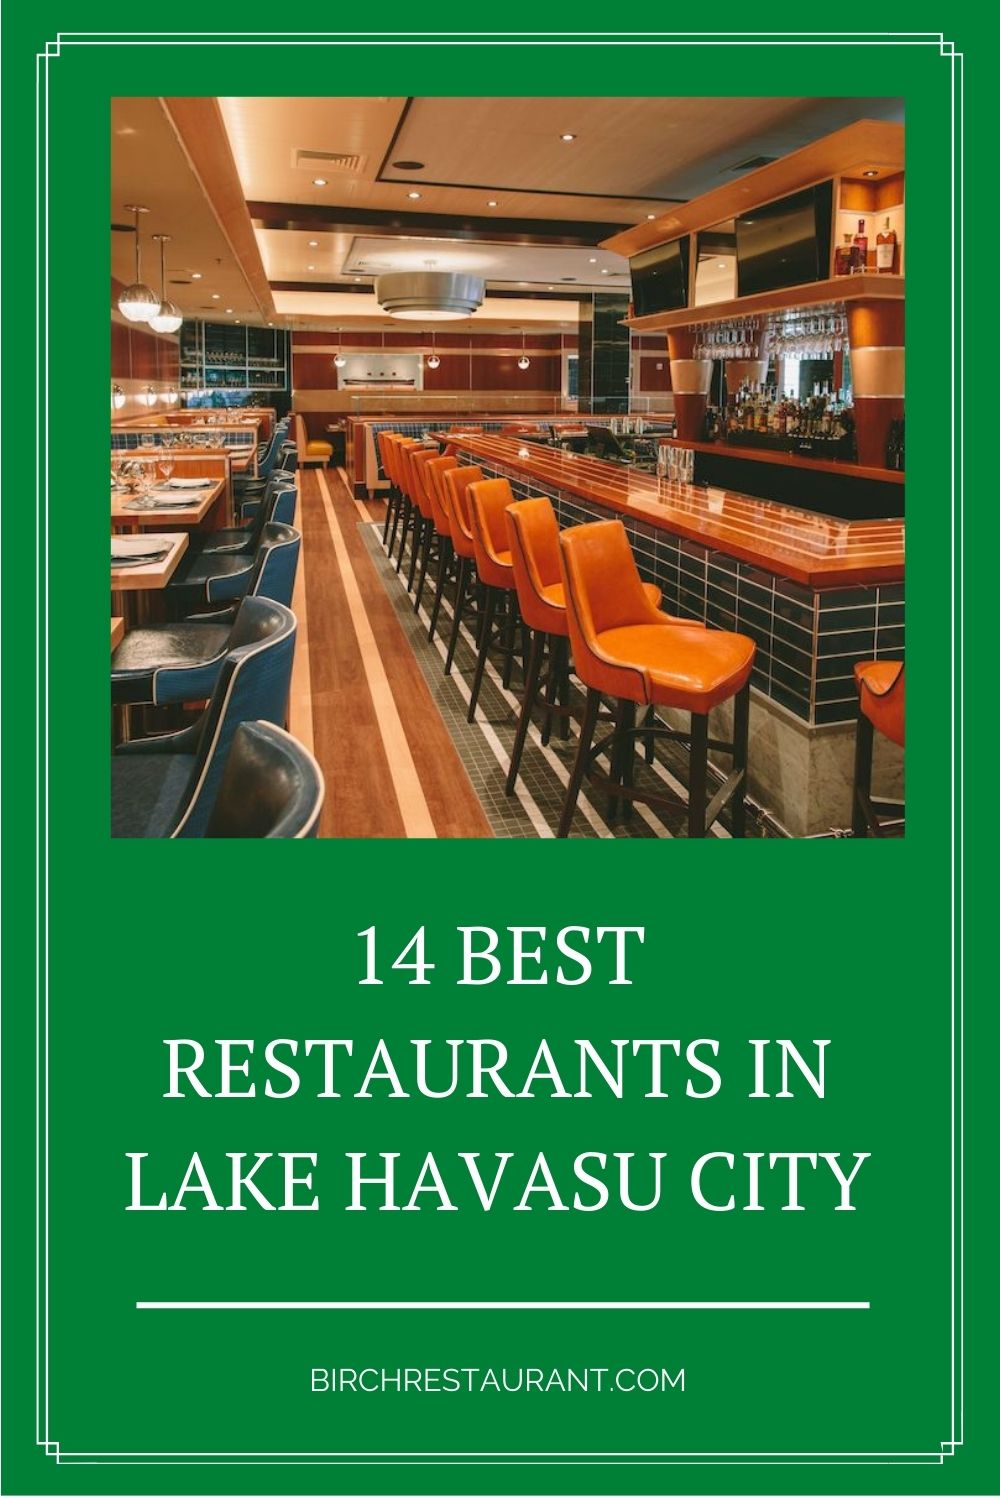 Best Restaurants in Lake Havasu City